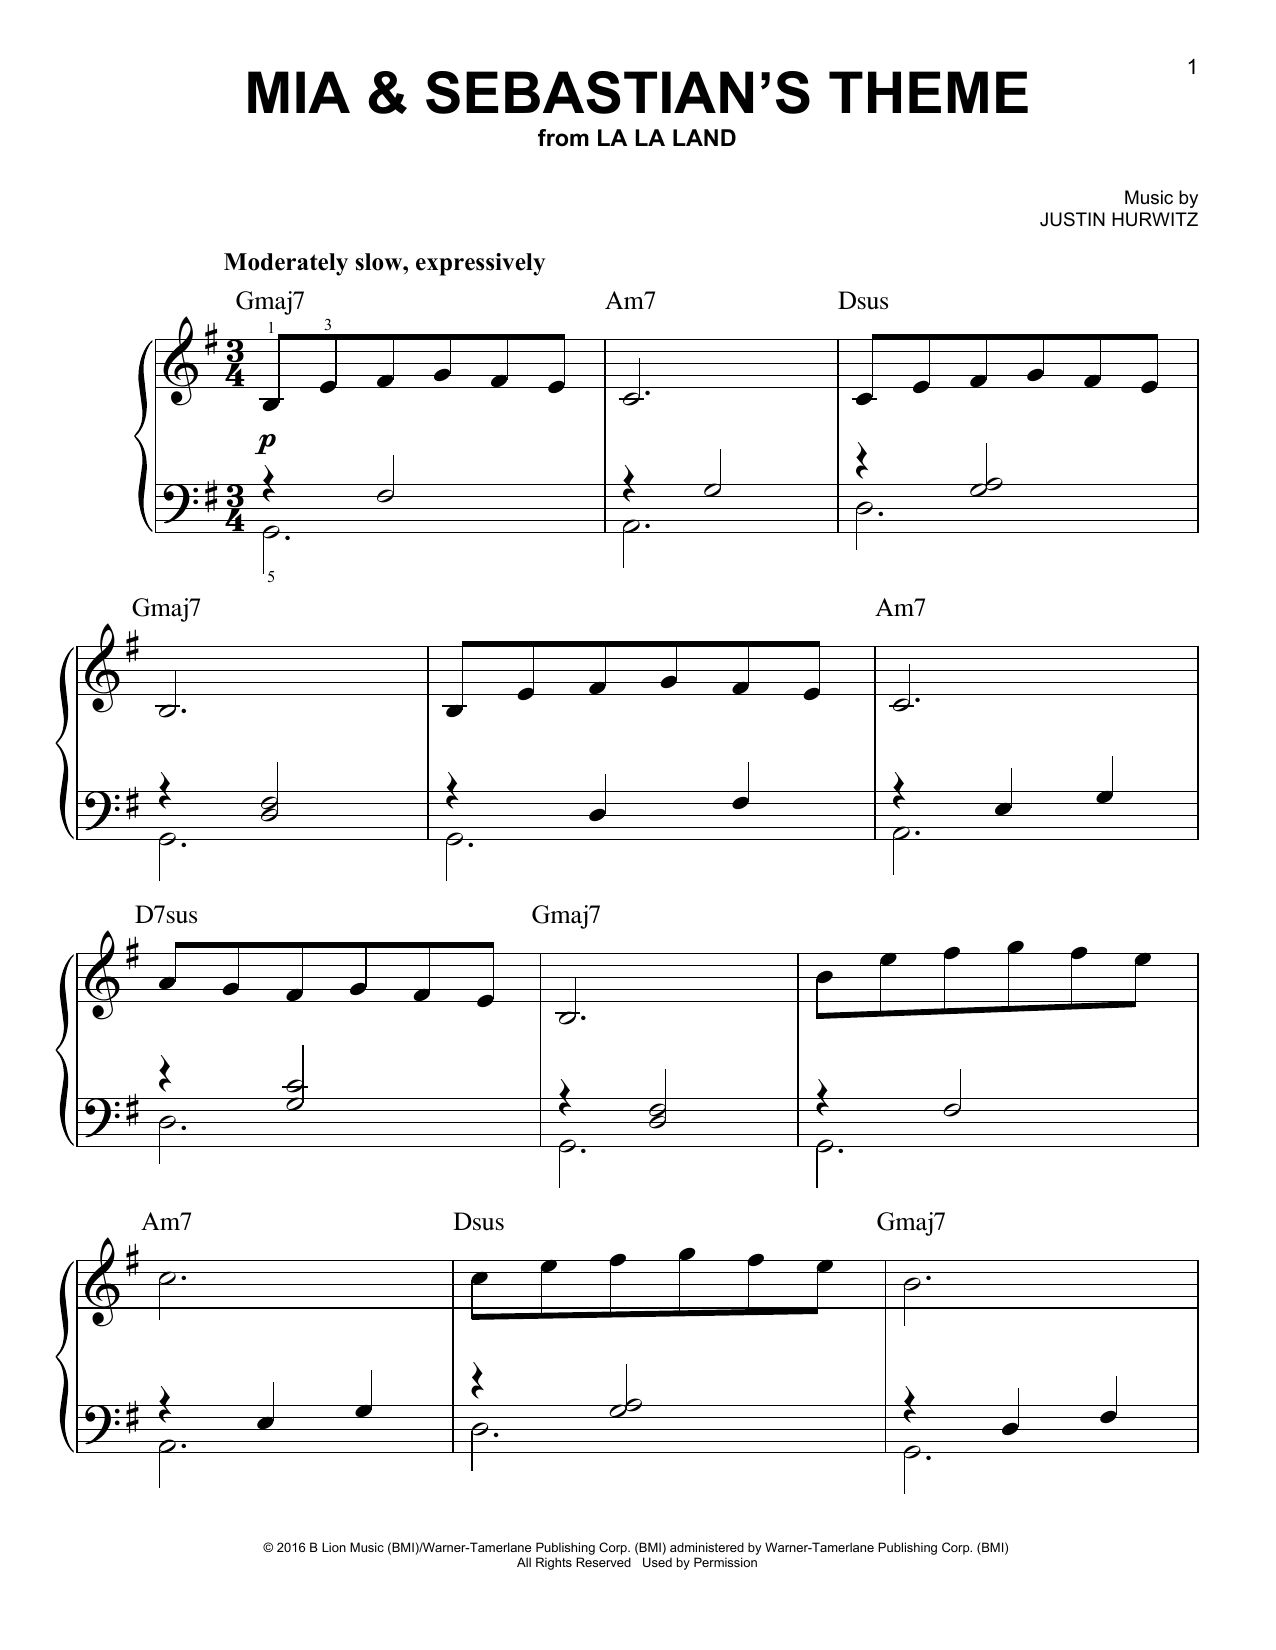 Justin Hurwitz Mia & Sebastian's Theme (from La La Land) Sheet Music Notes & Chords for Alto Saxophone Duet - Download or Print PDF